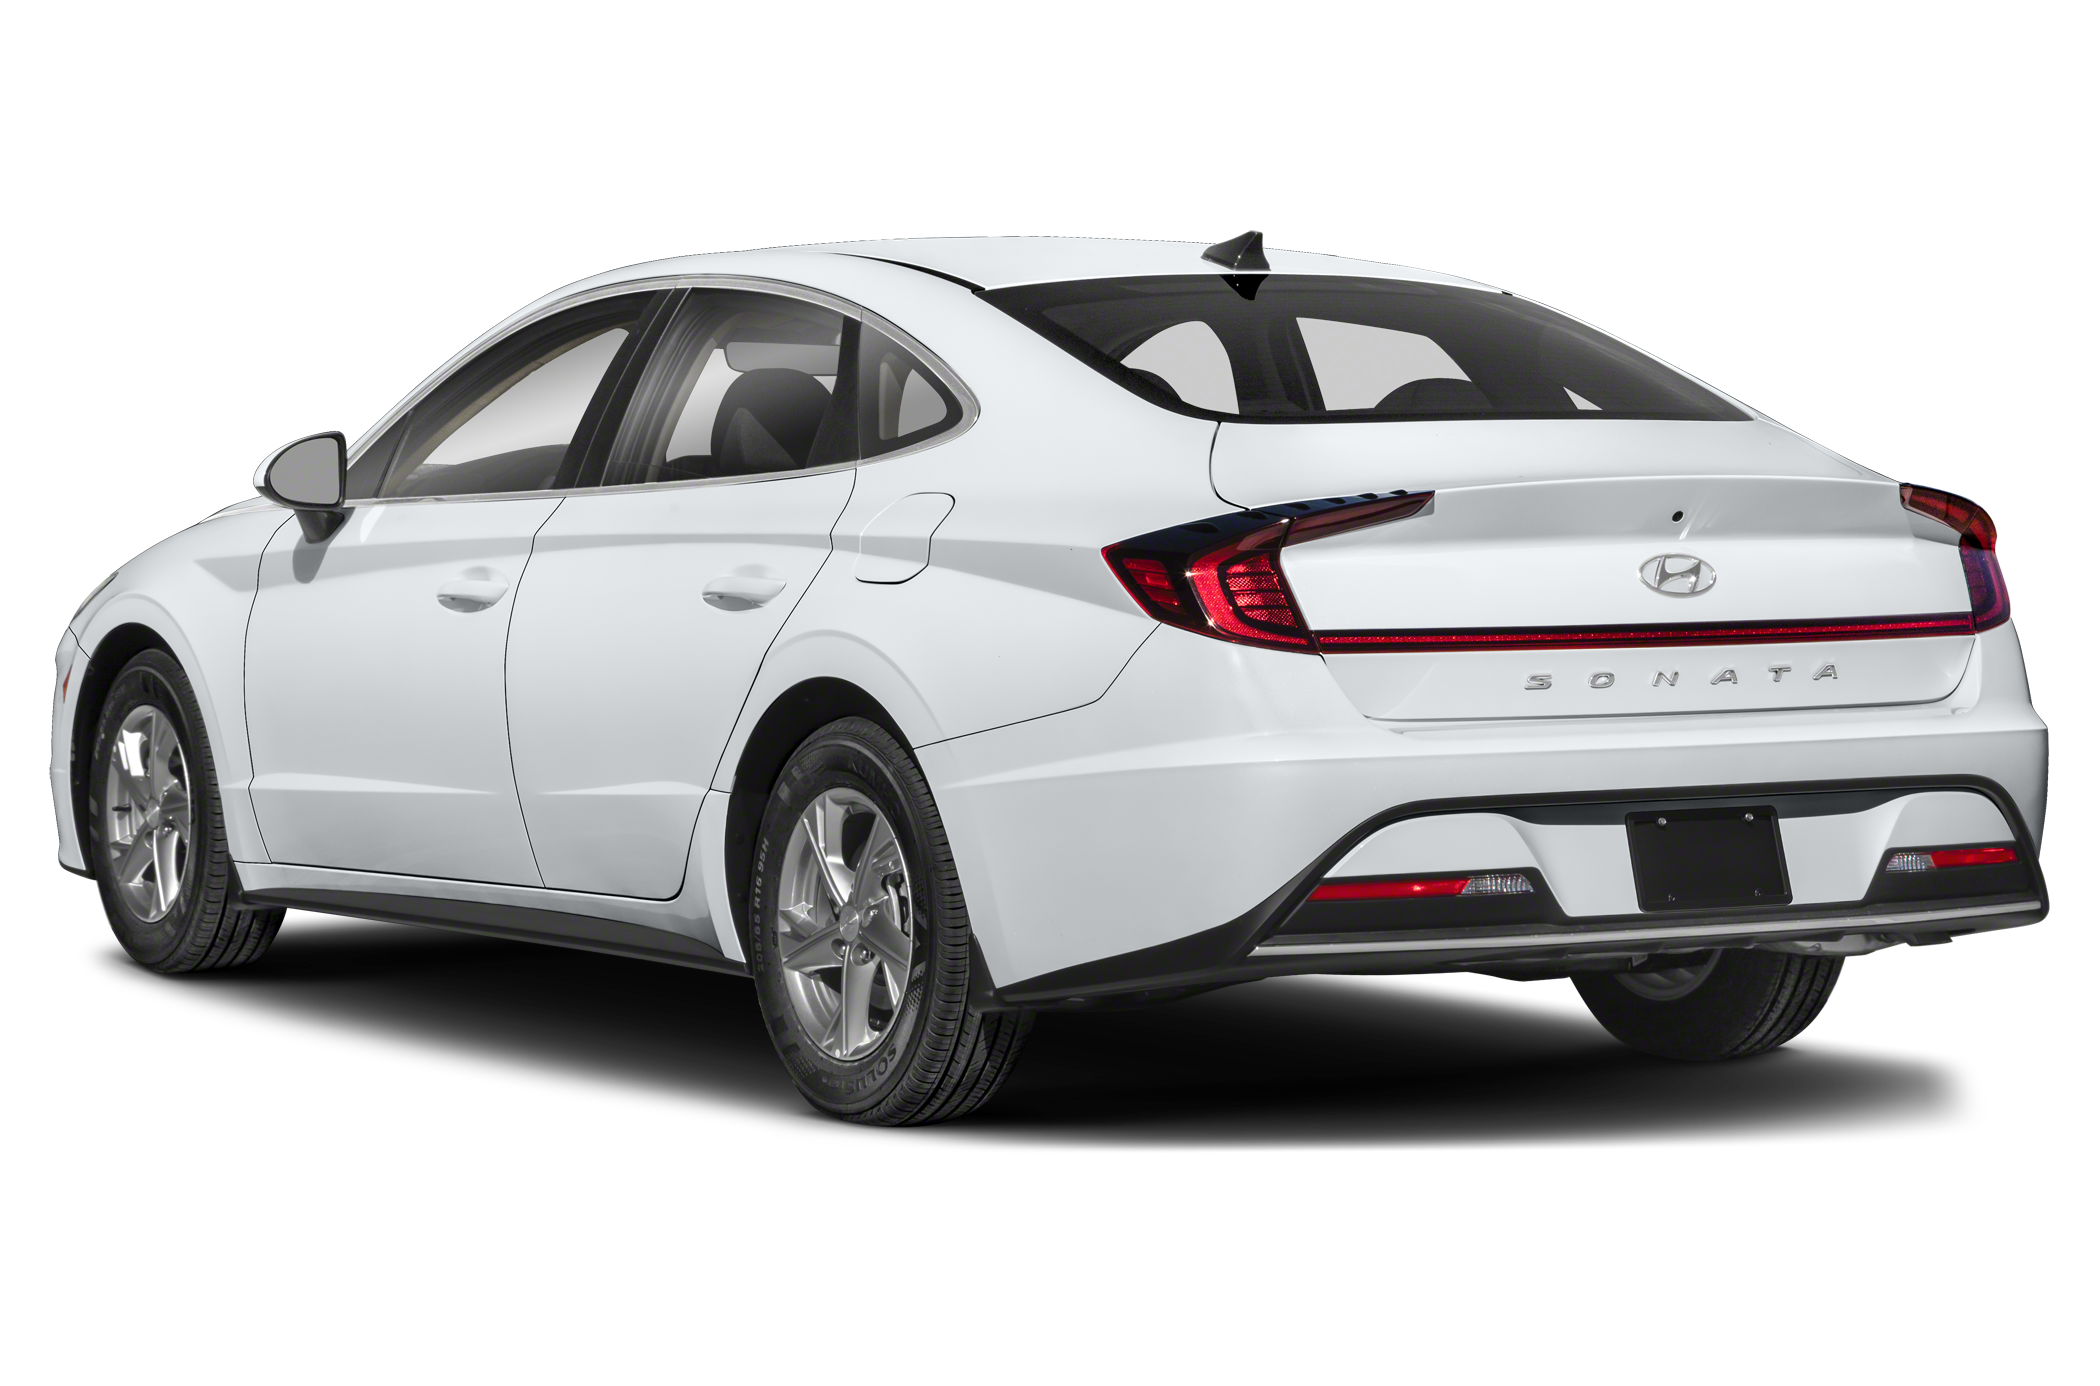 Hyundai Sonata Models, Generations & Redesigns | Cars.com